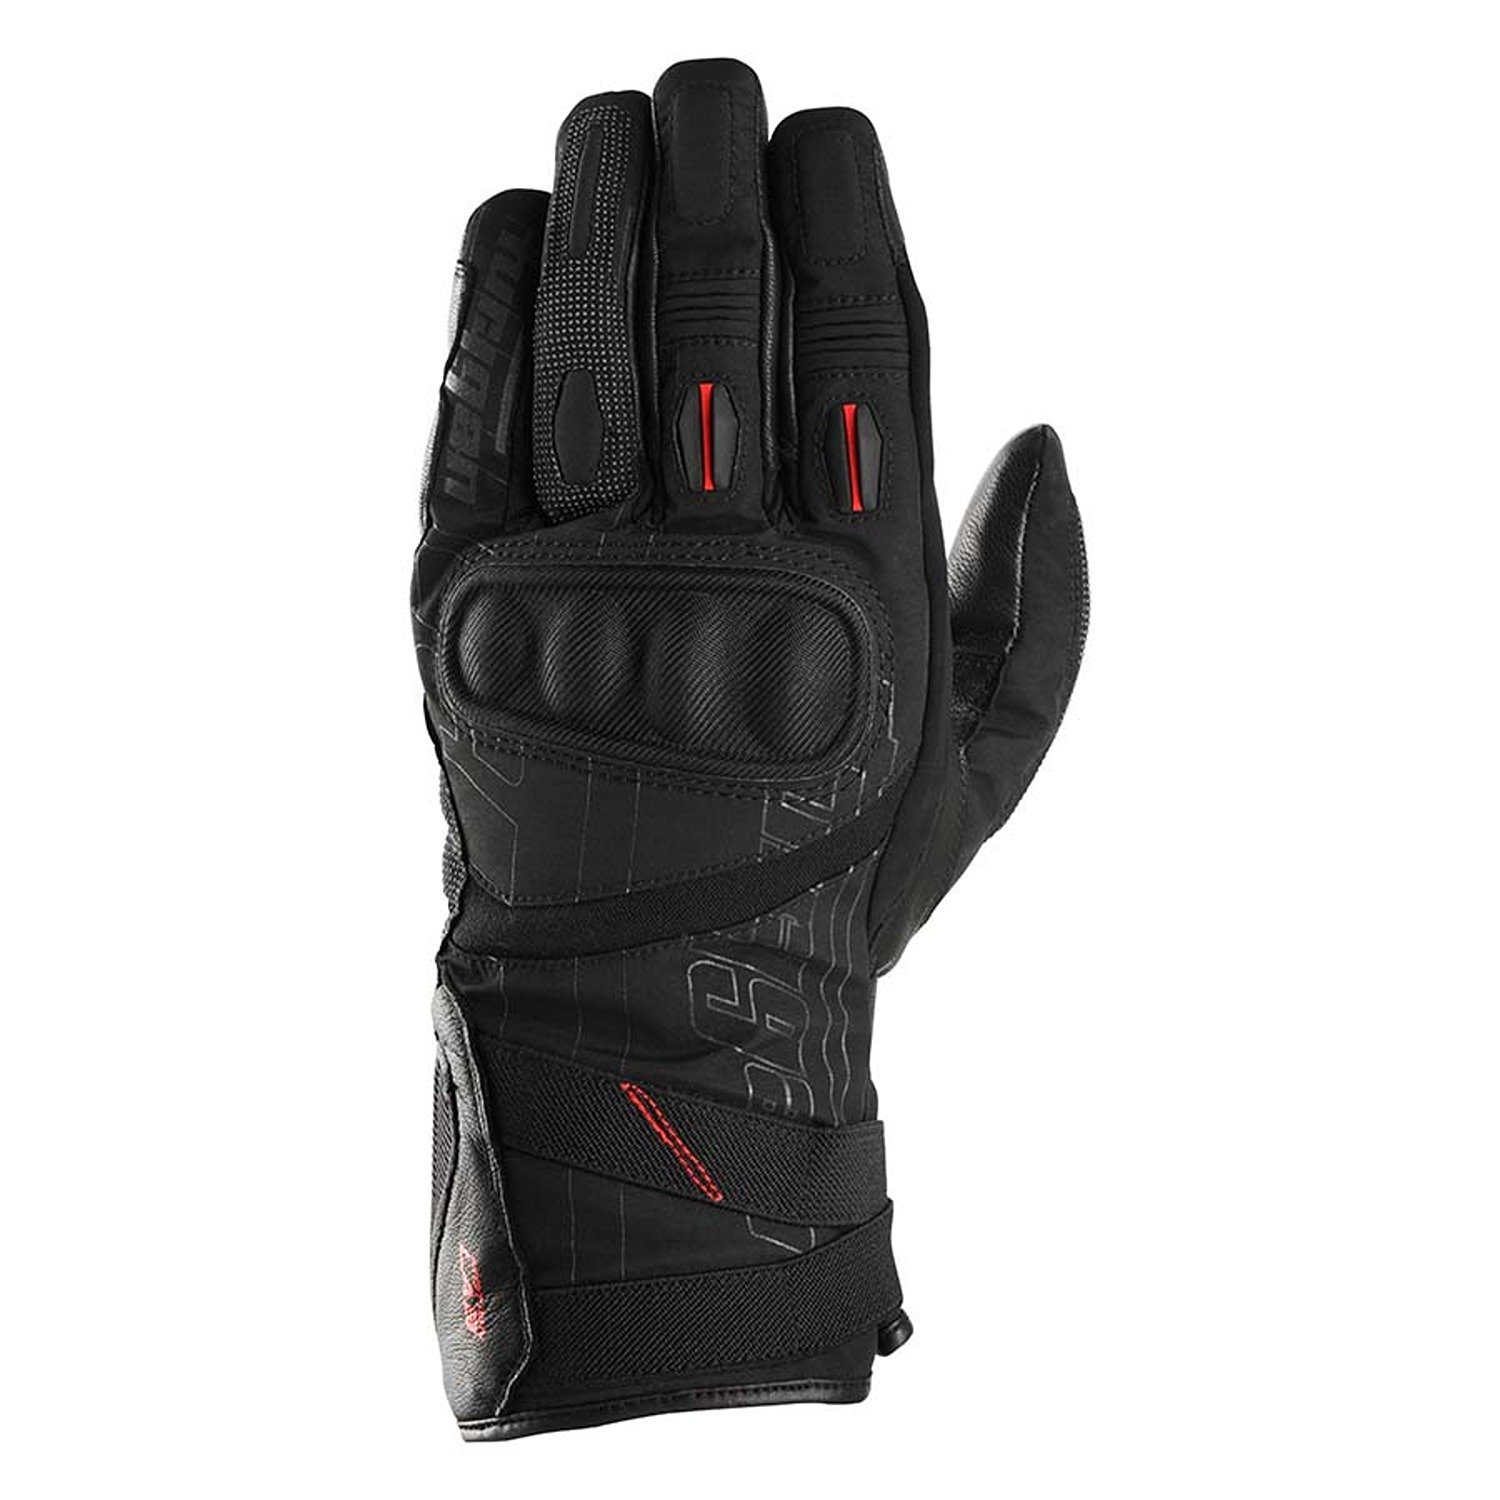 Image of Furygan Nomad Gloves Black Size XL ID 3435980373351